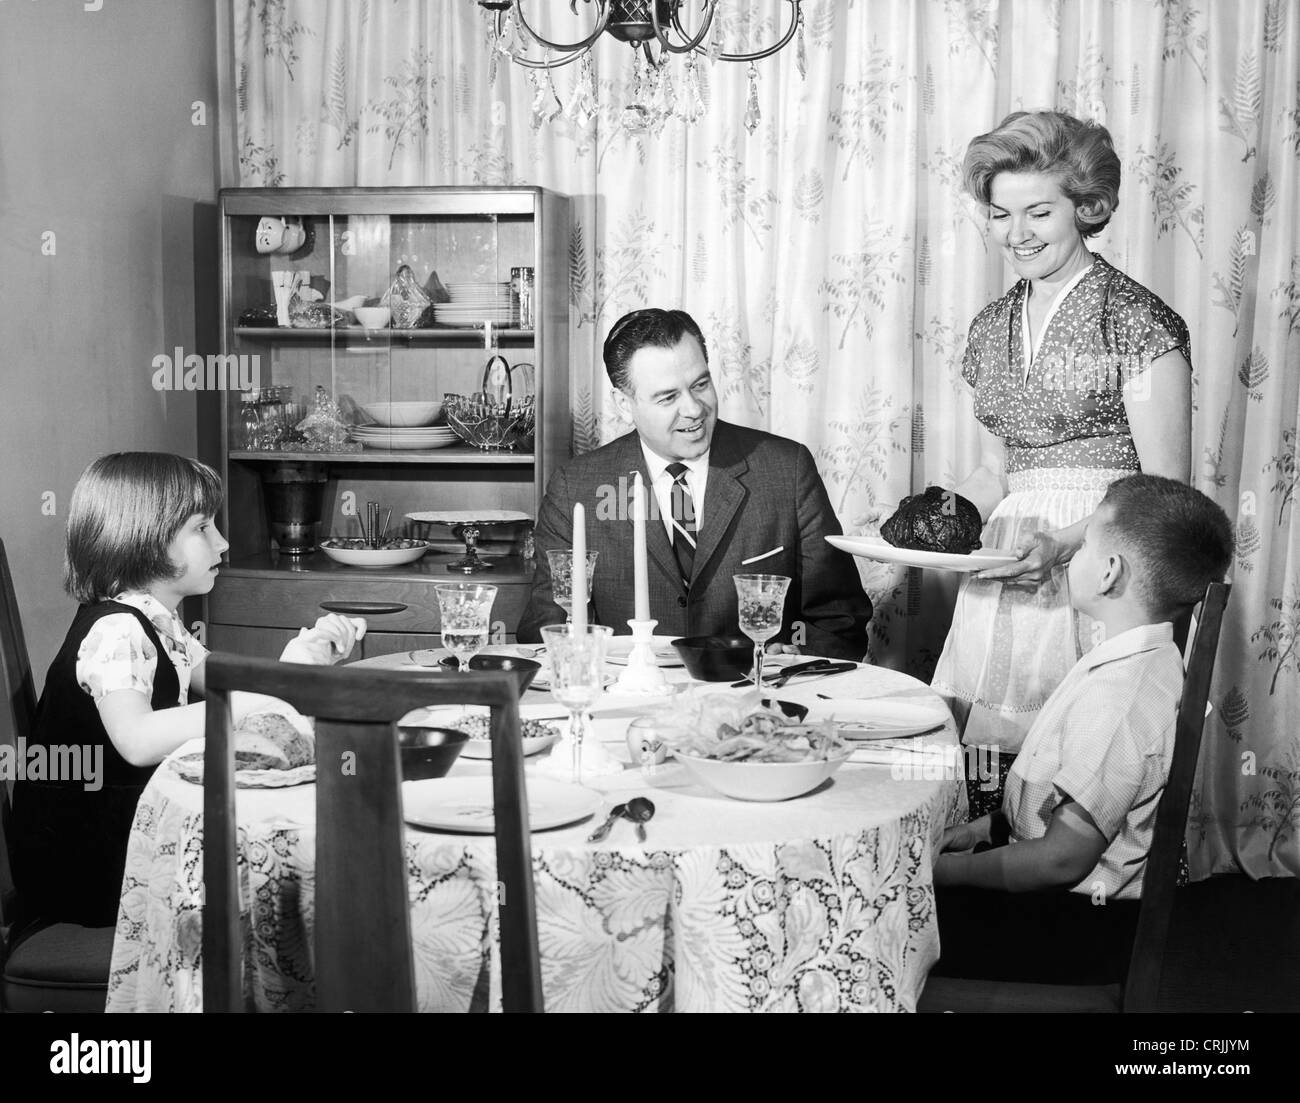 Family having dinner at home Stock Photo - Alamy